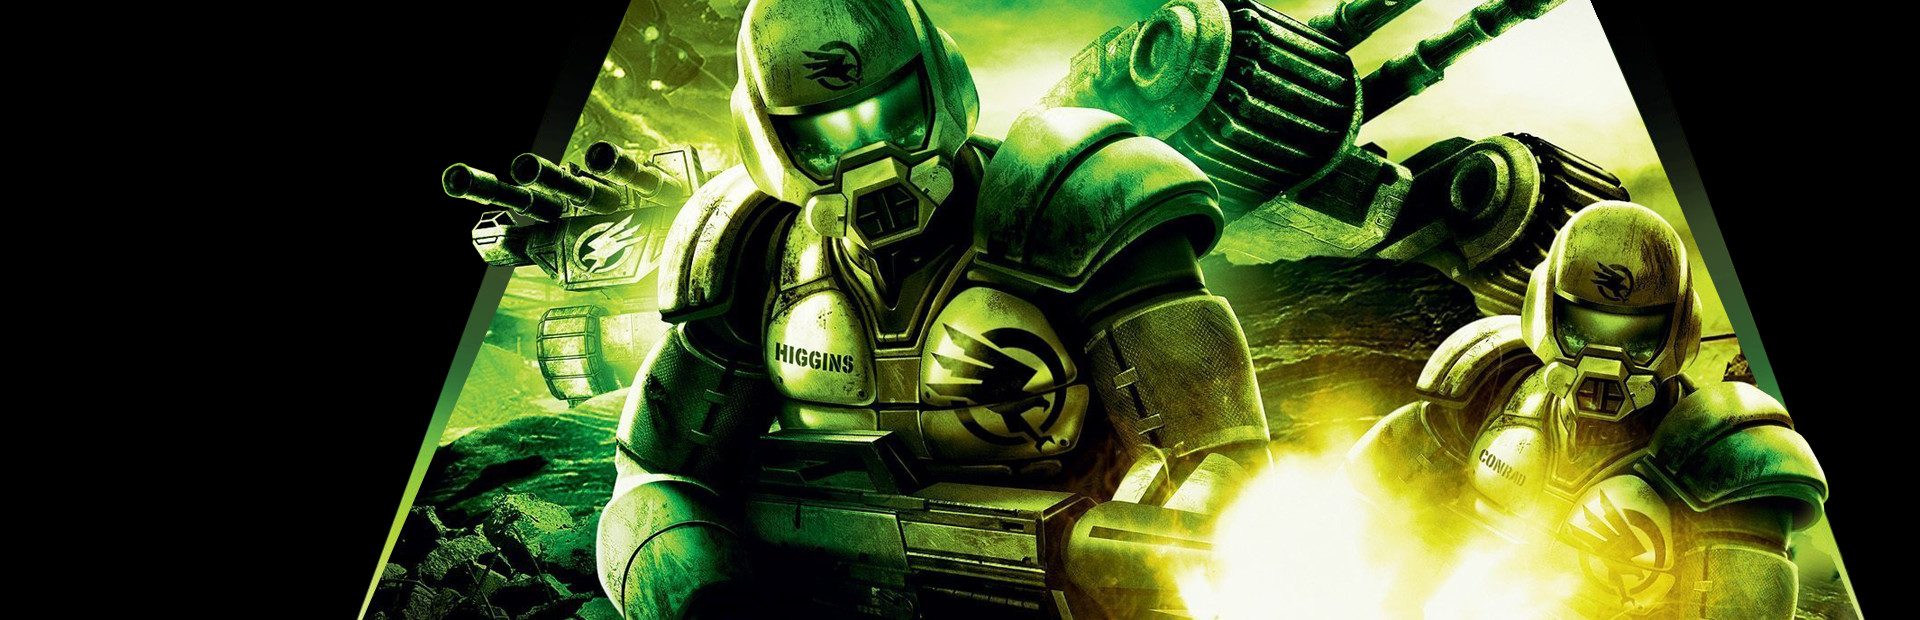 Command & Conquer 3 Tiberium Wars™ cover image